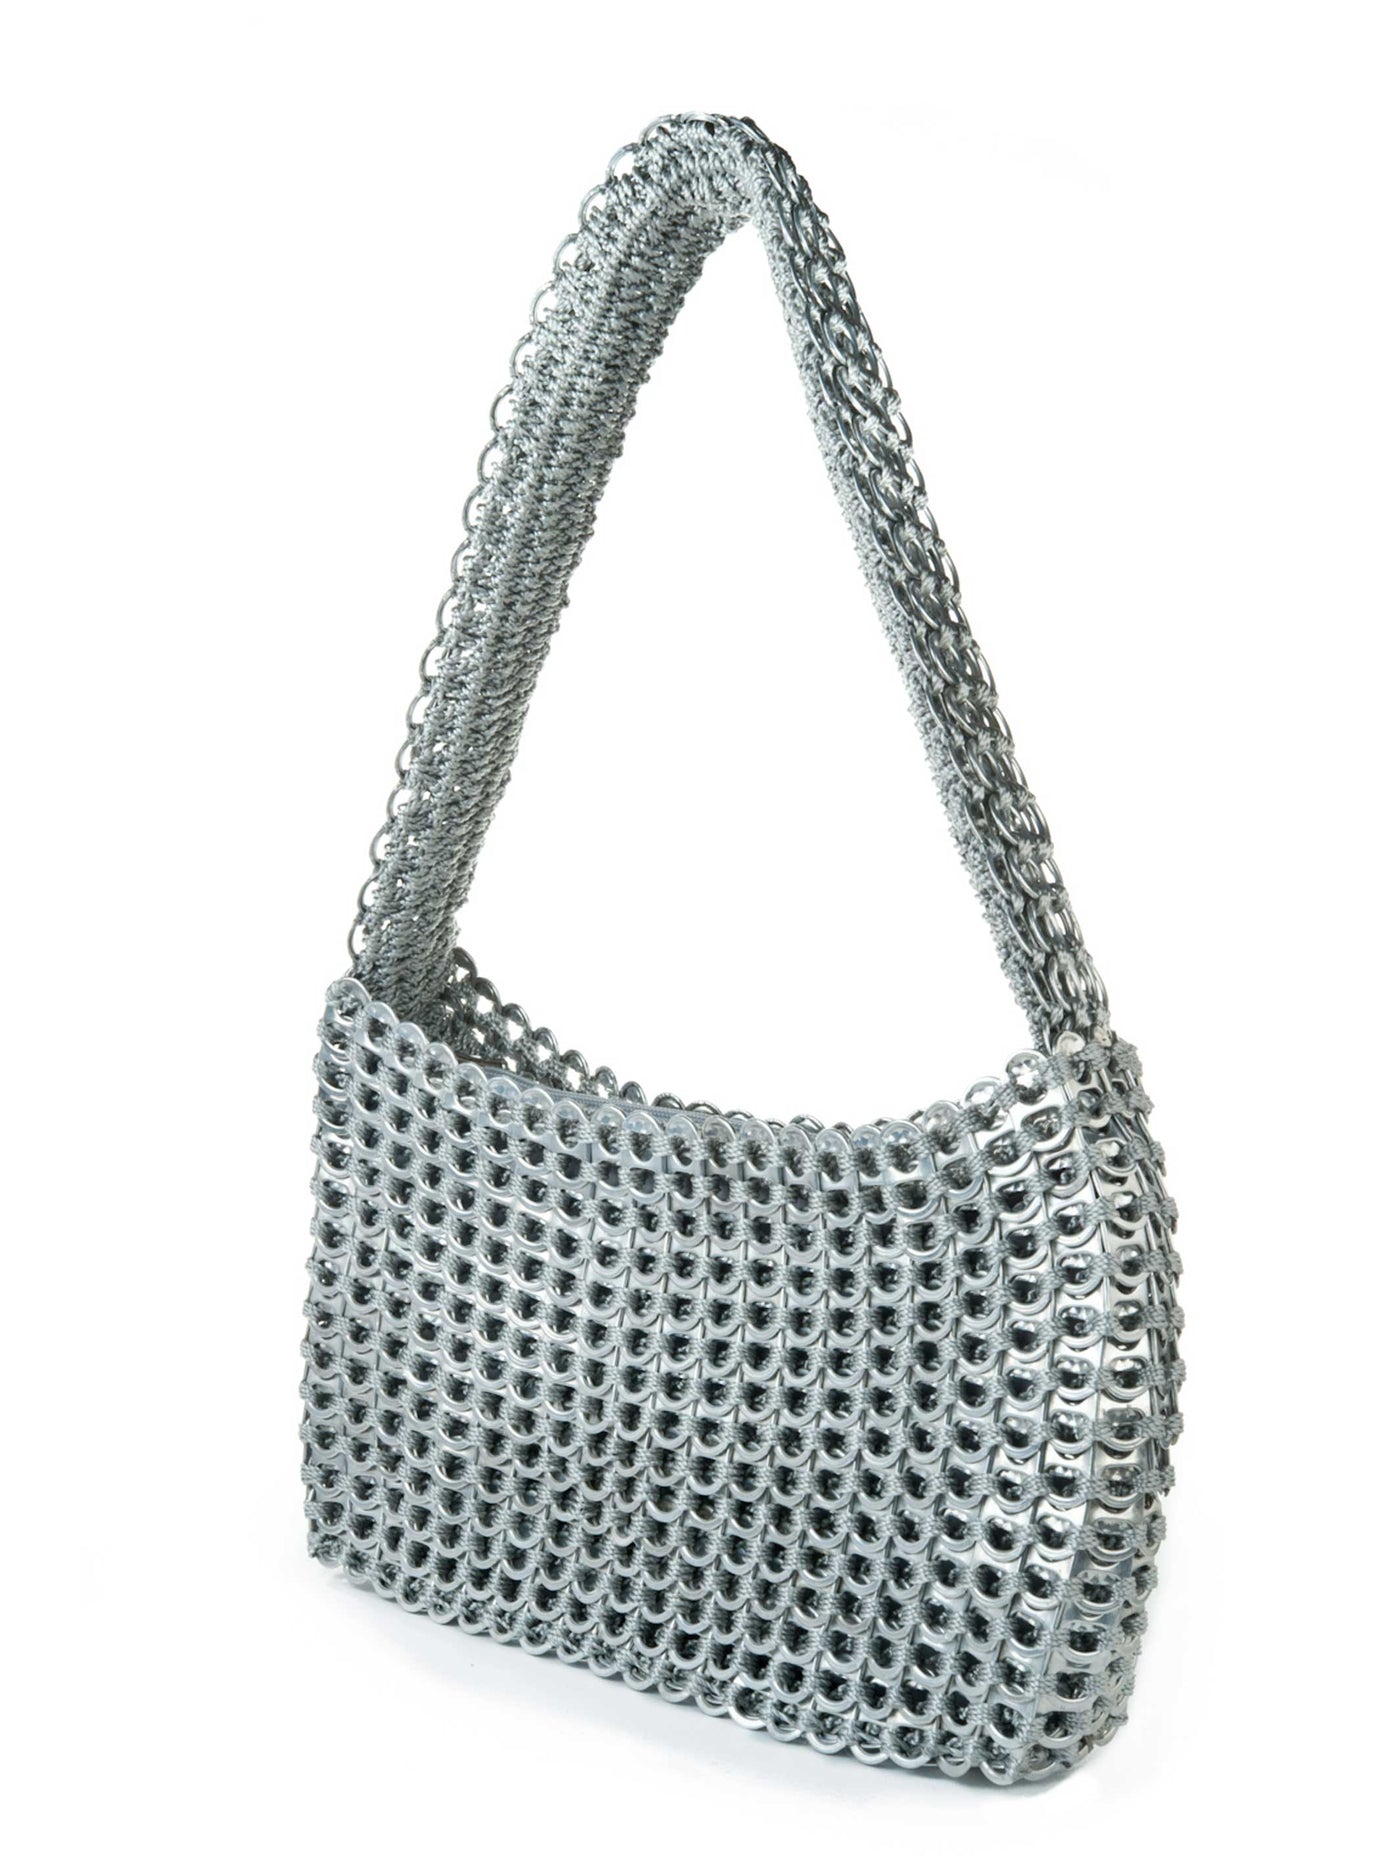 Socorro Handmade Recycled Bag Silver Escama Studio